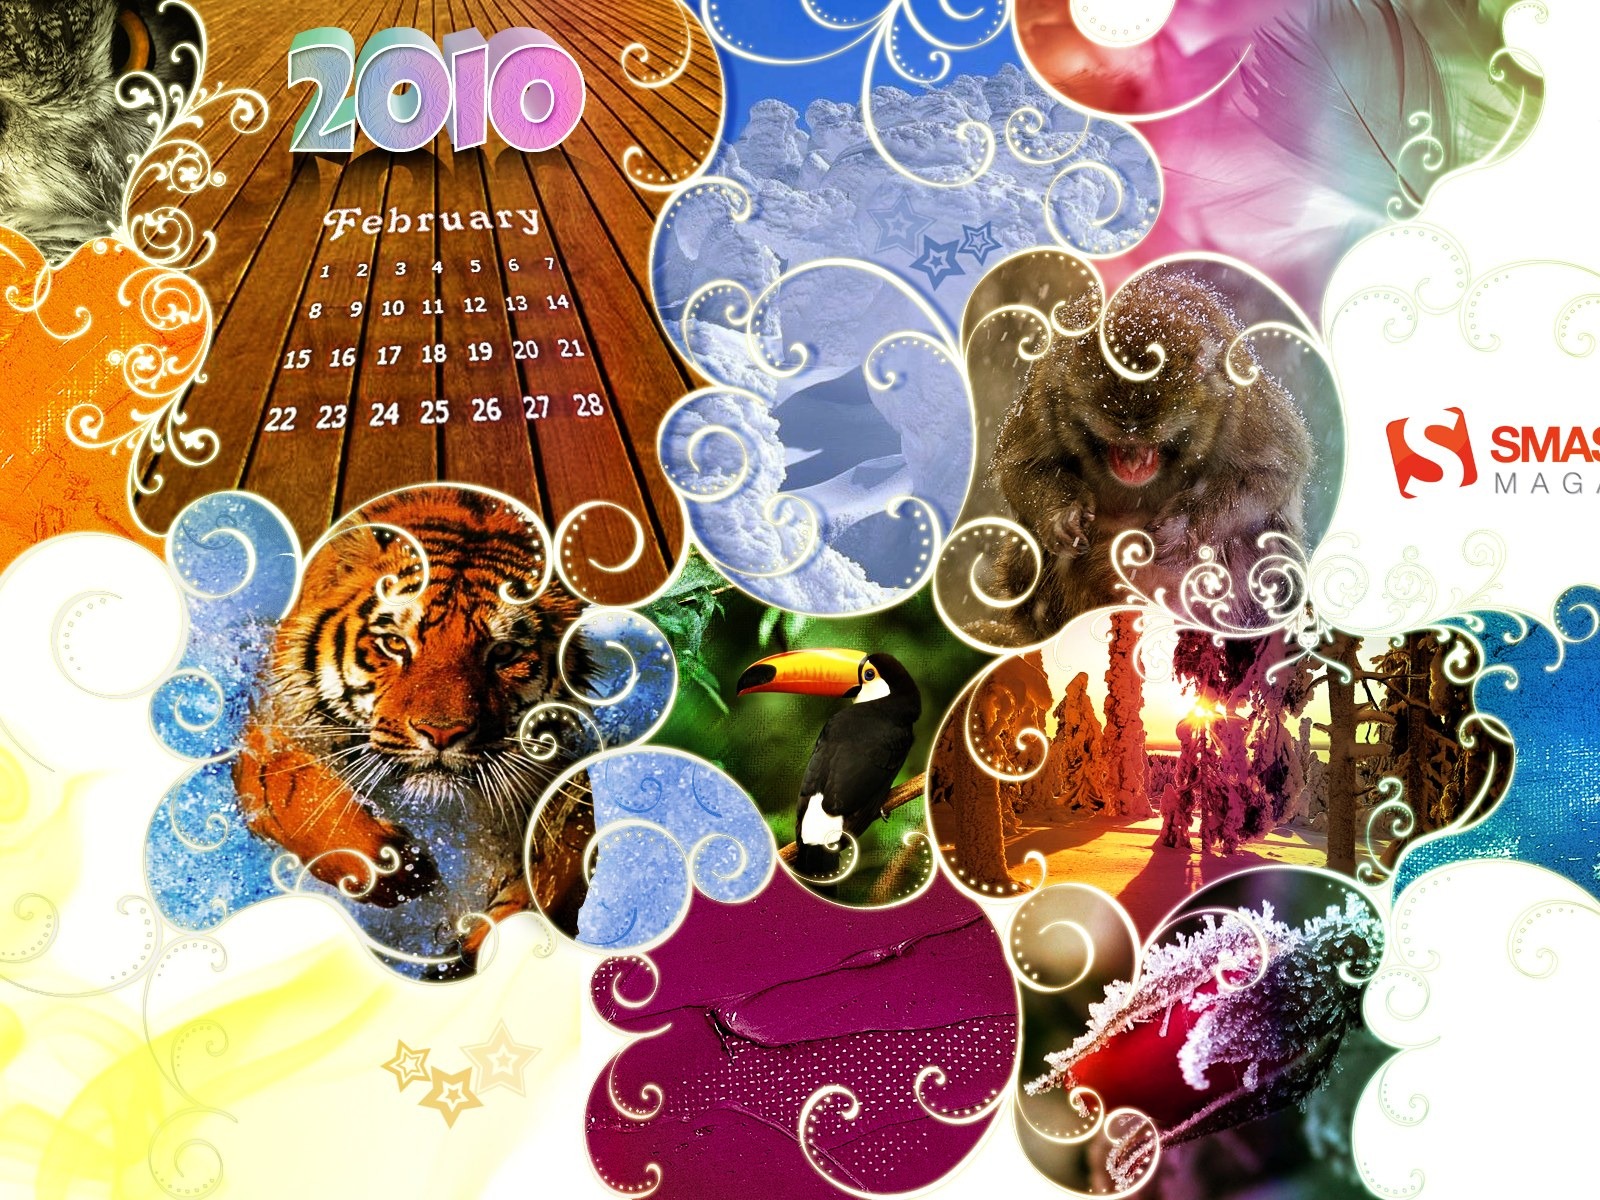 Februar 2010 Kalender Wallpaper kreative #1 - 1600x1200